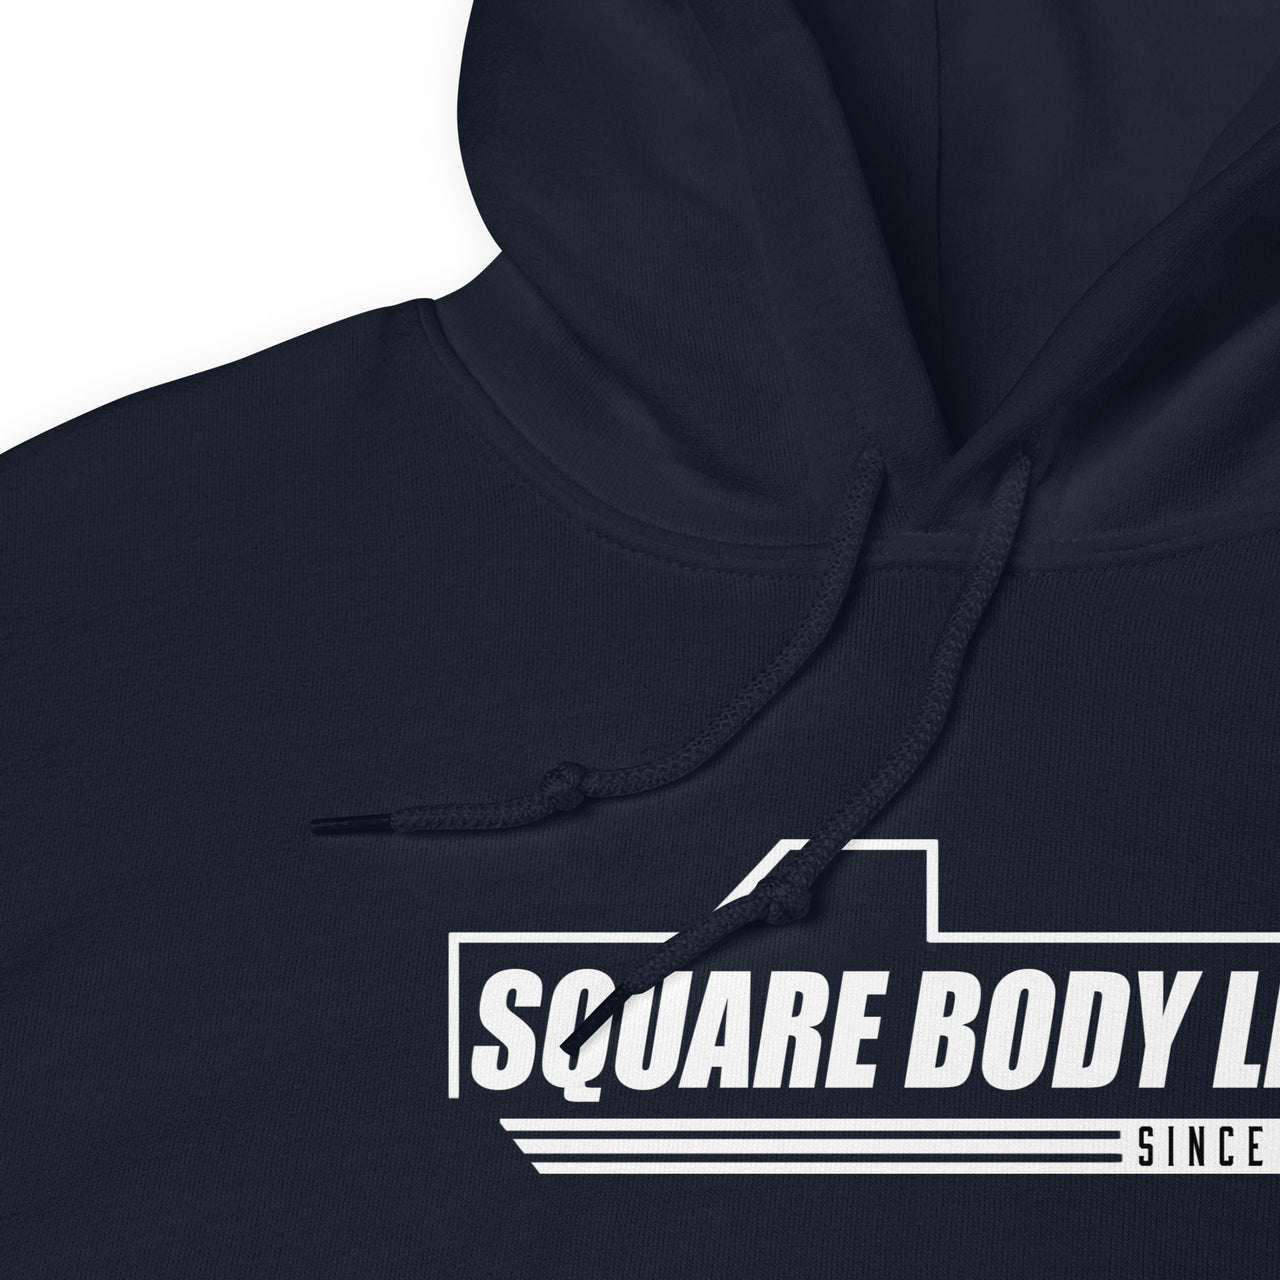 Square Body Life Hoodie Squarebody Truck Sweatshirt in navy close up